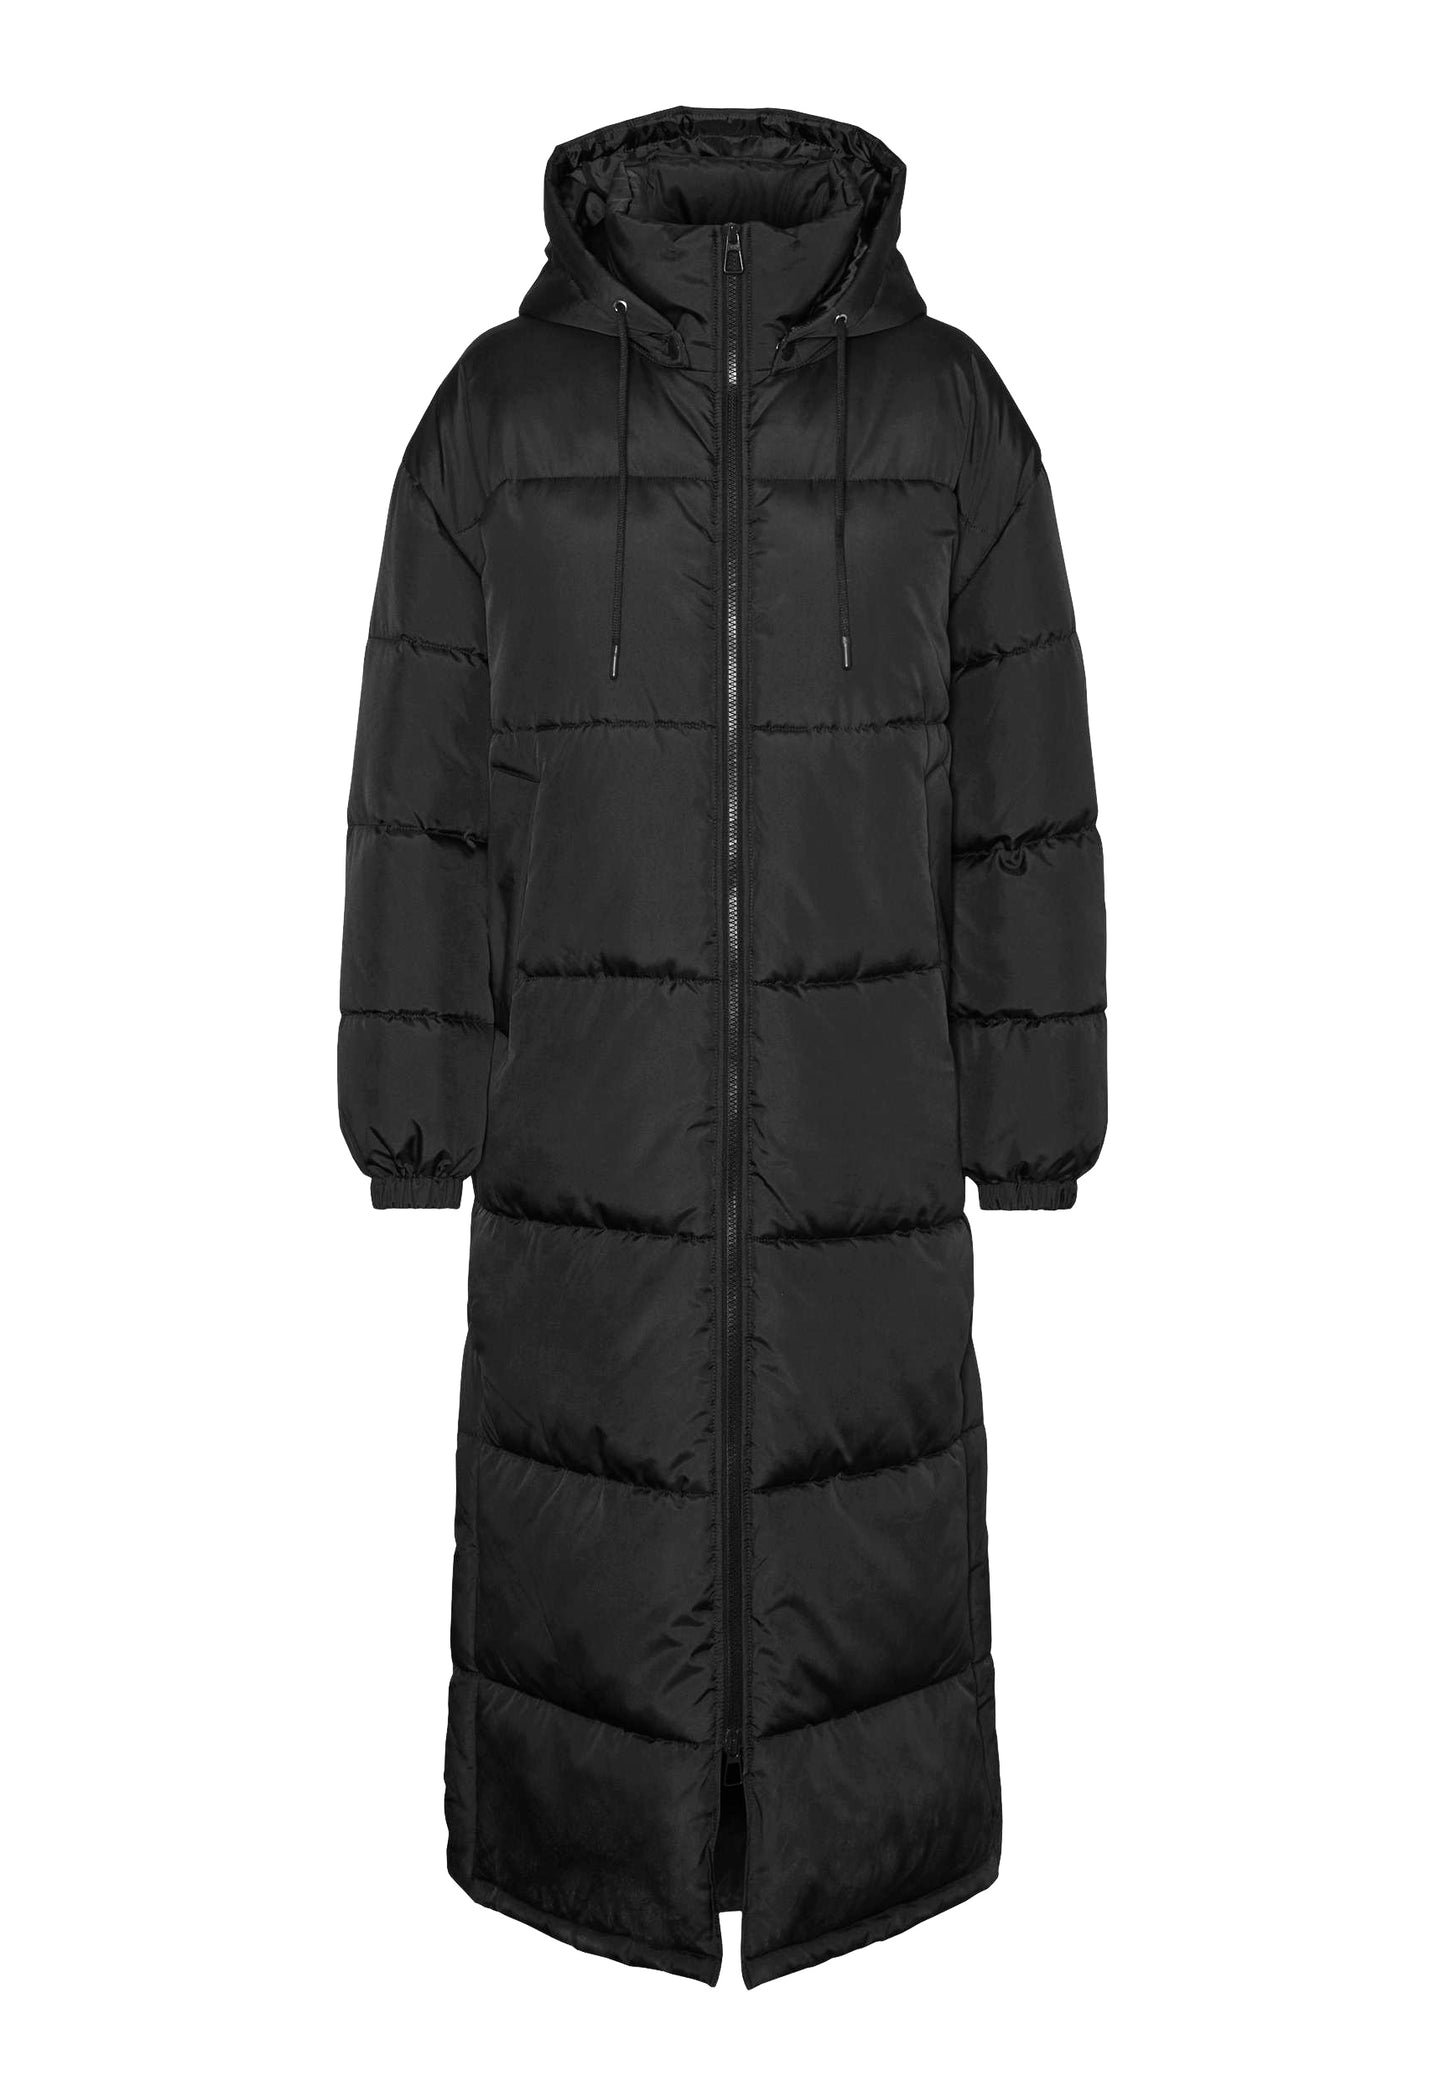 VERO MODA Klea Maxi Longline Puffer Coat with Hood in Black - One Nation Clothing